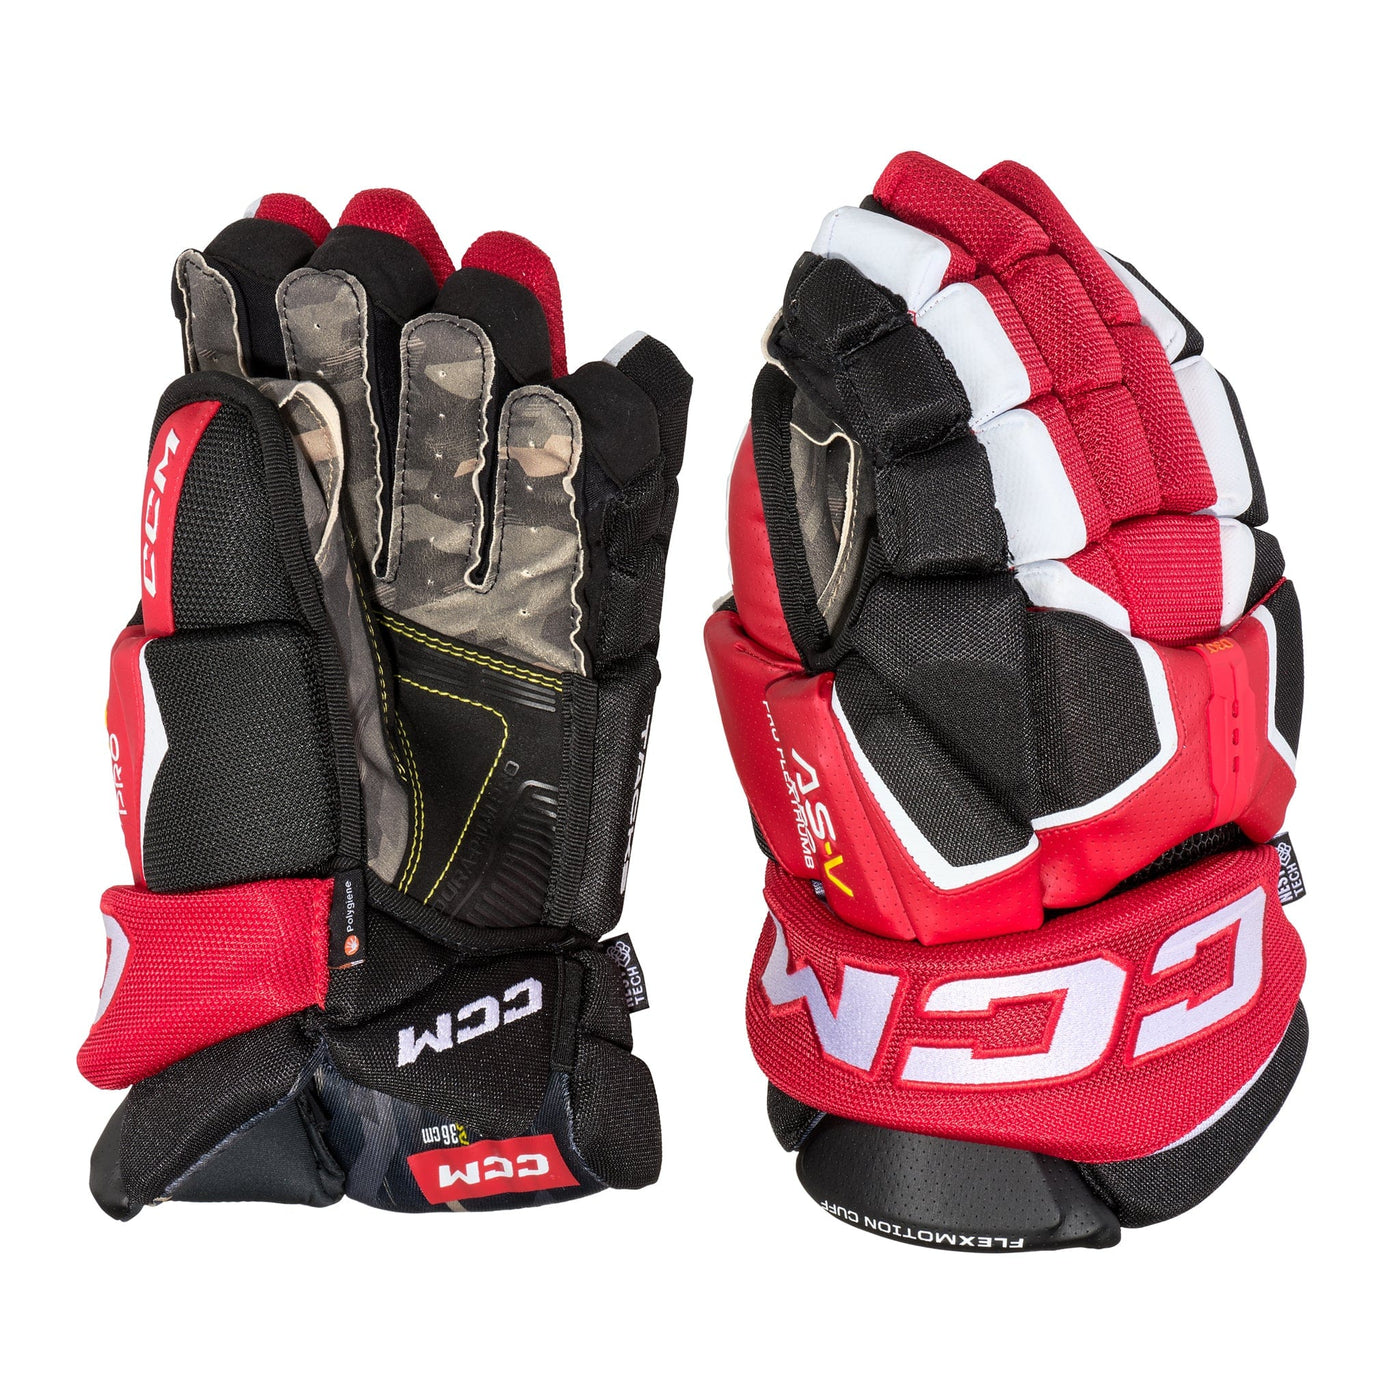 CCM Tacks AS-V Pro Junior Hockey Gloves - The Hockey Shop Source For Sports